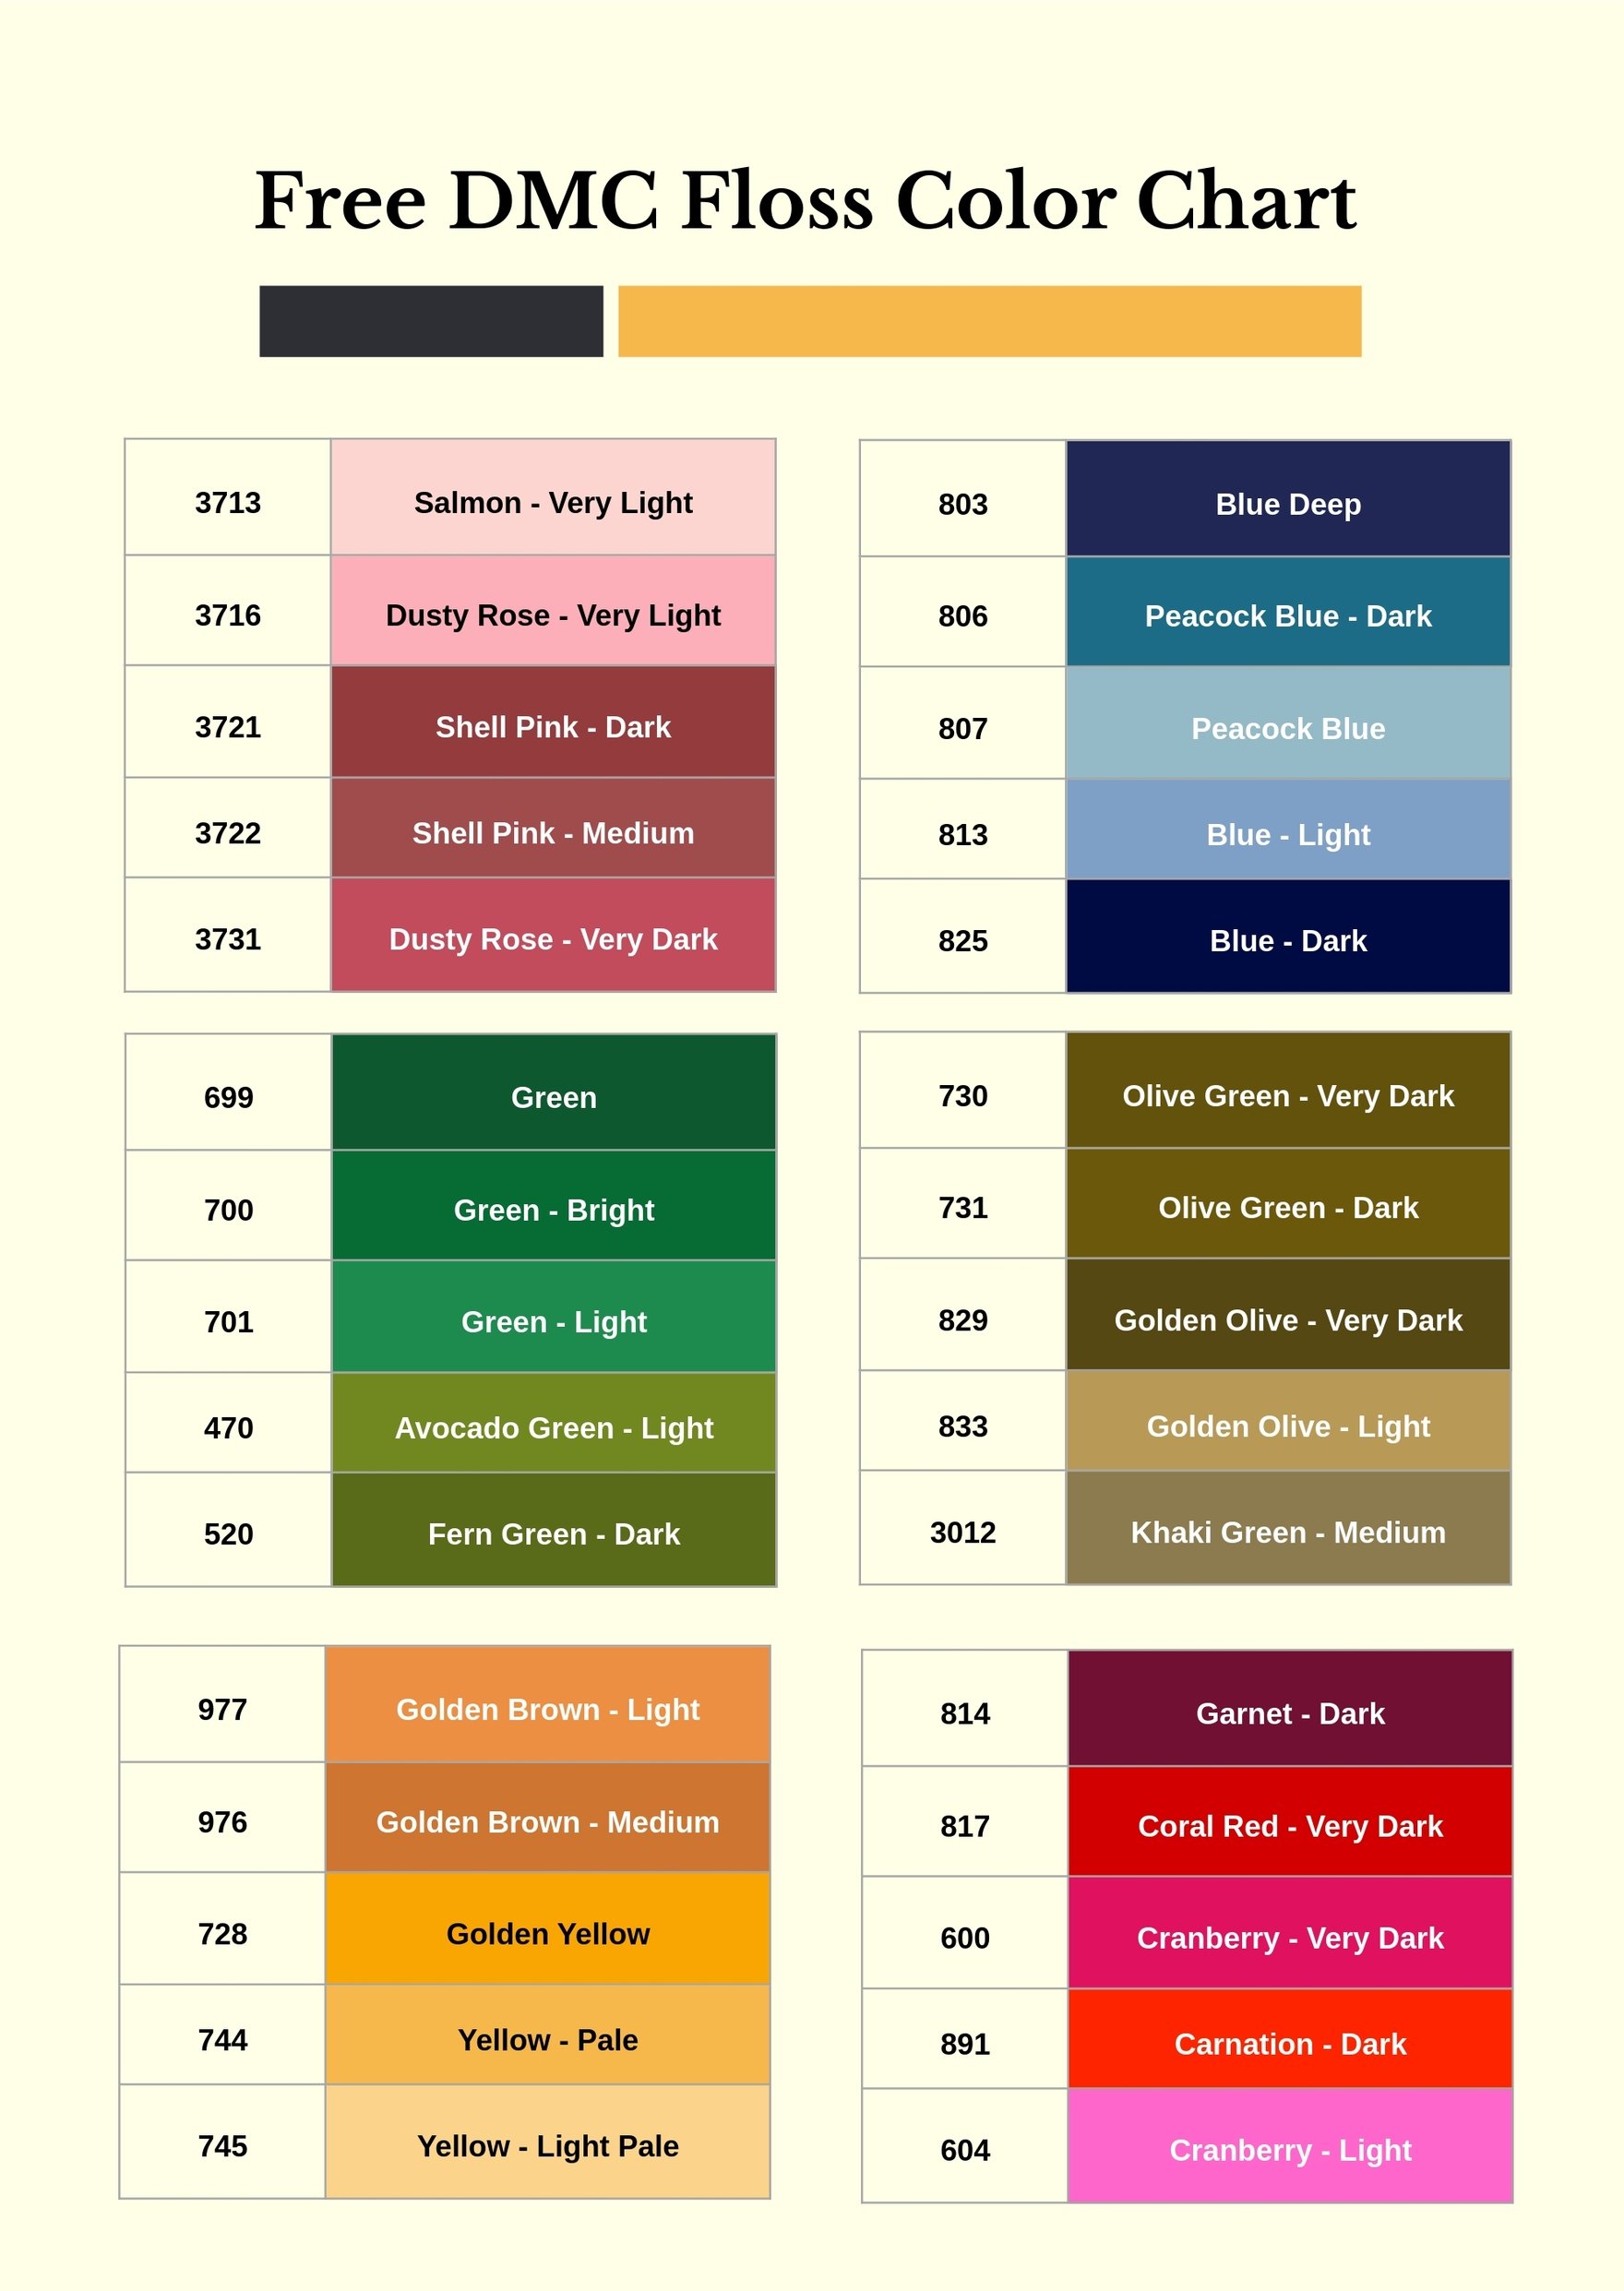 DMC Floss Color Chart